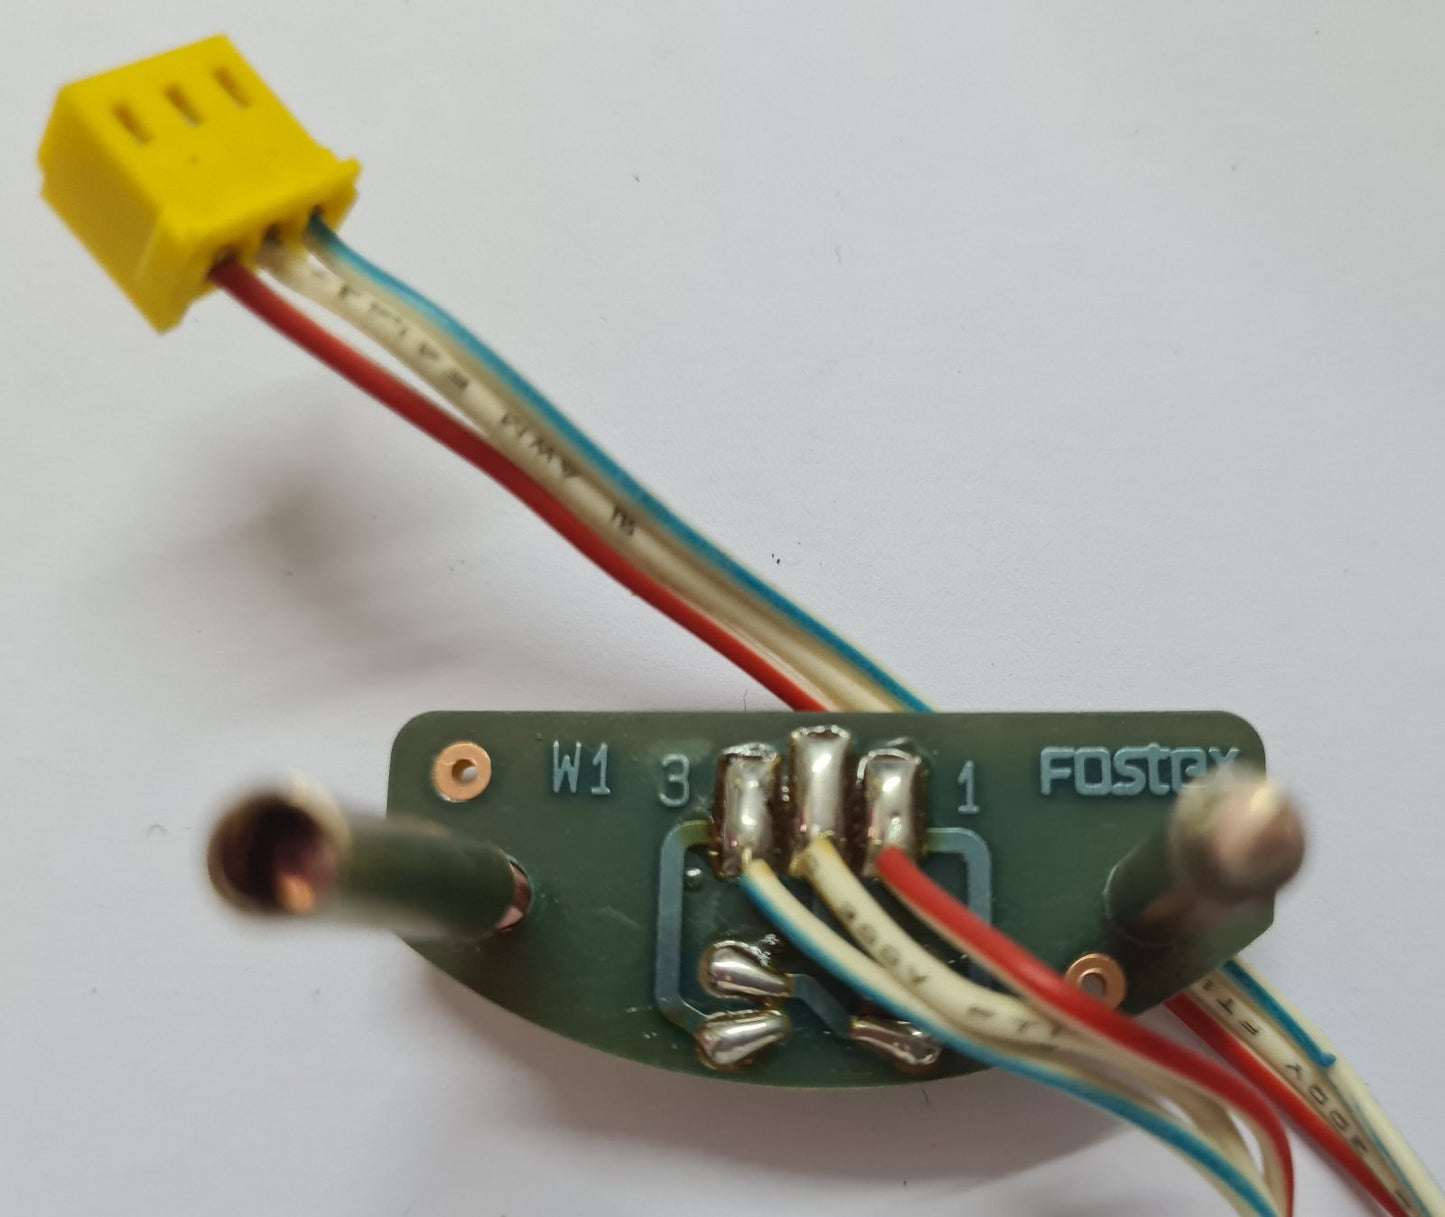 Fostex reel sensor pcb 8251337 000